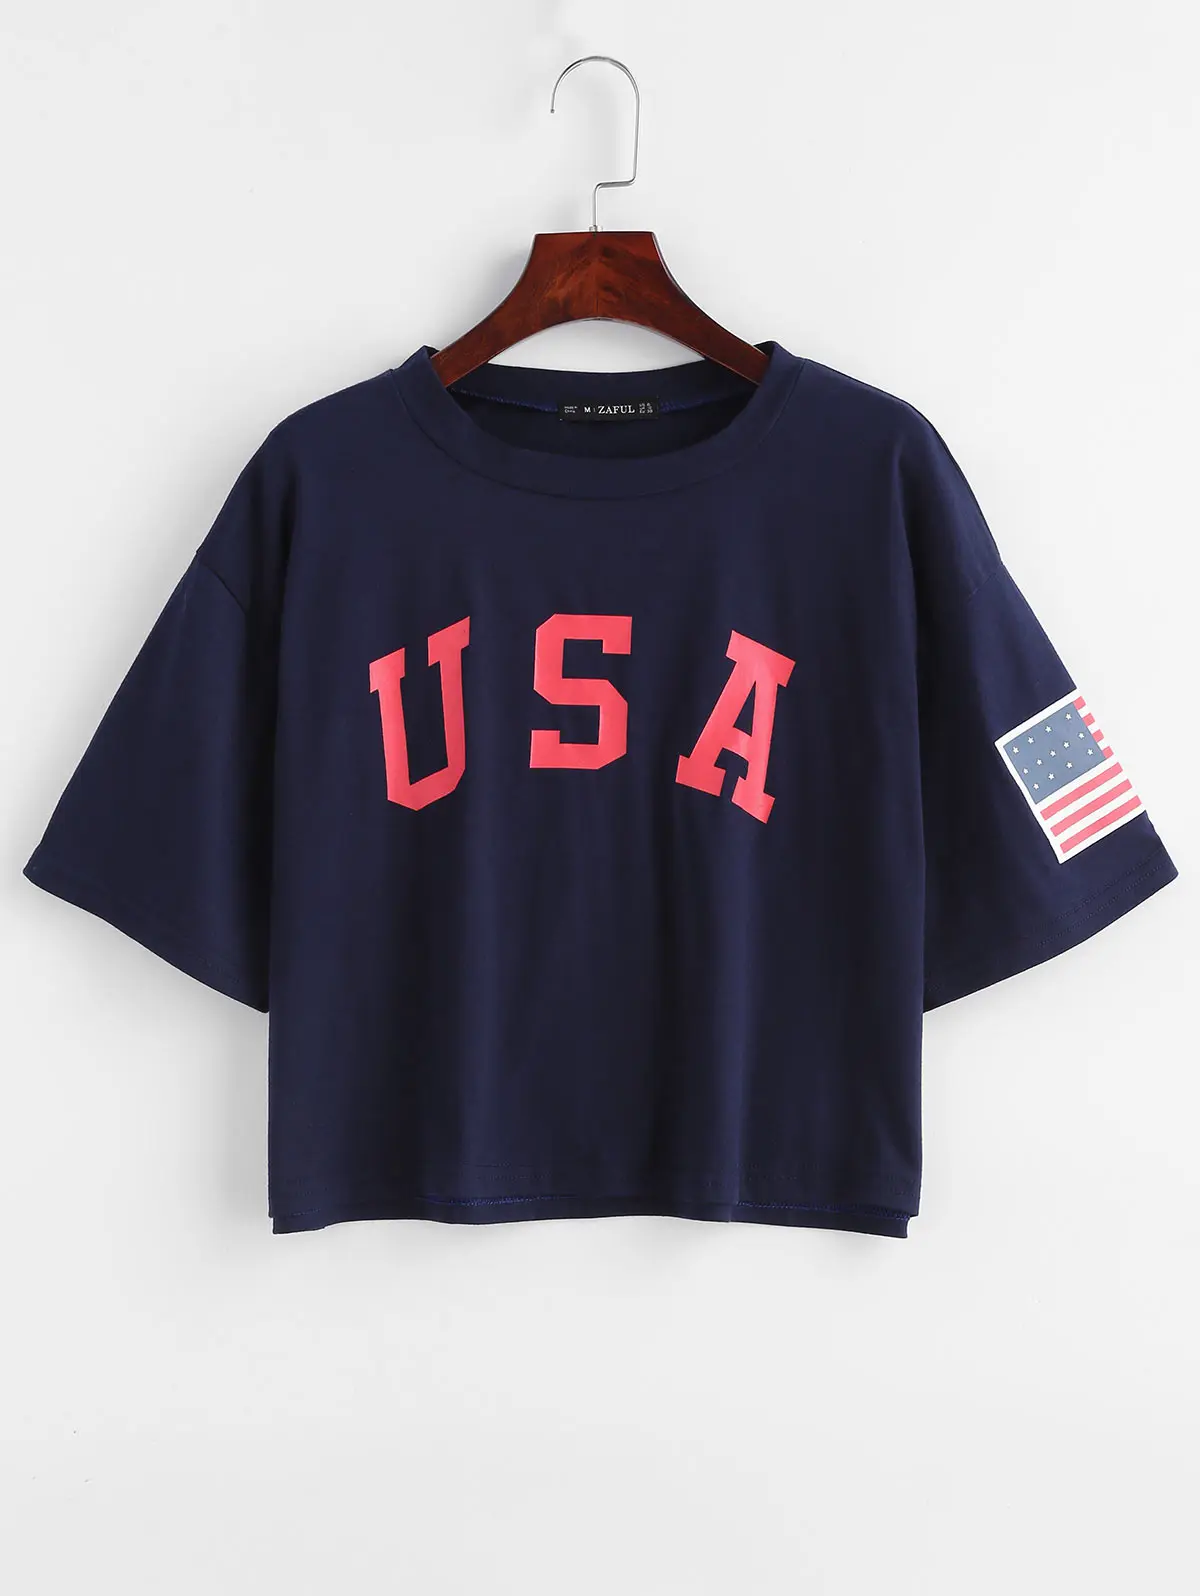 ZAFUL футболка с изображением американского флага | Женская одежда